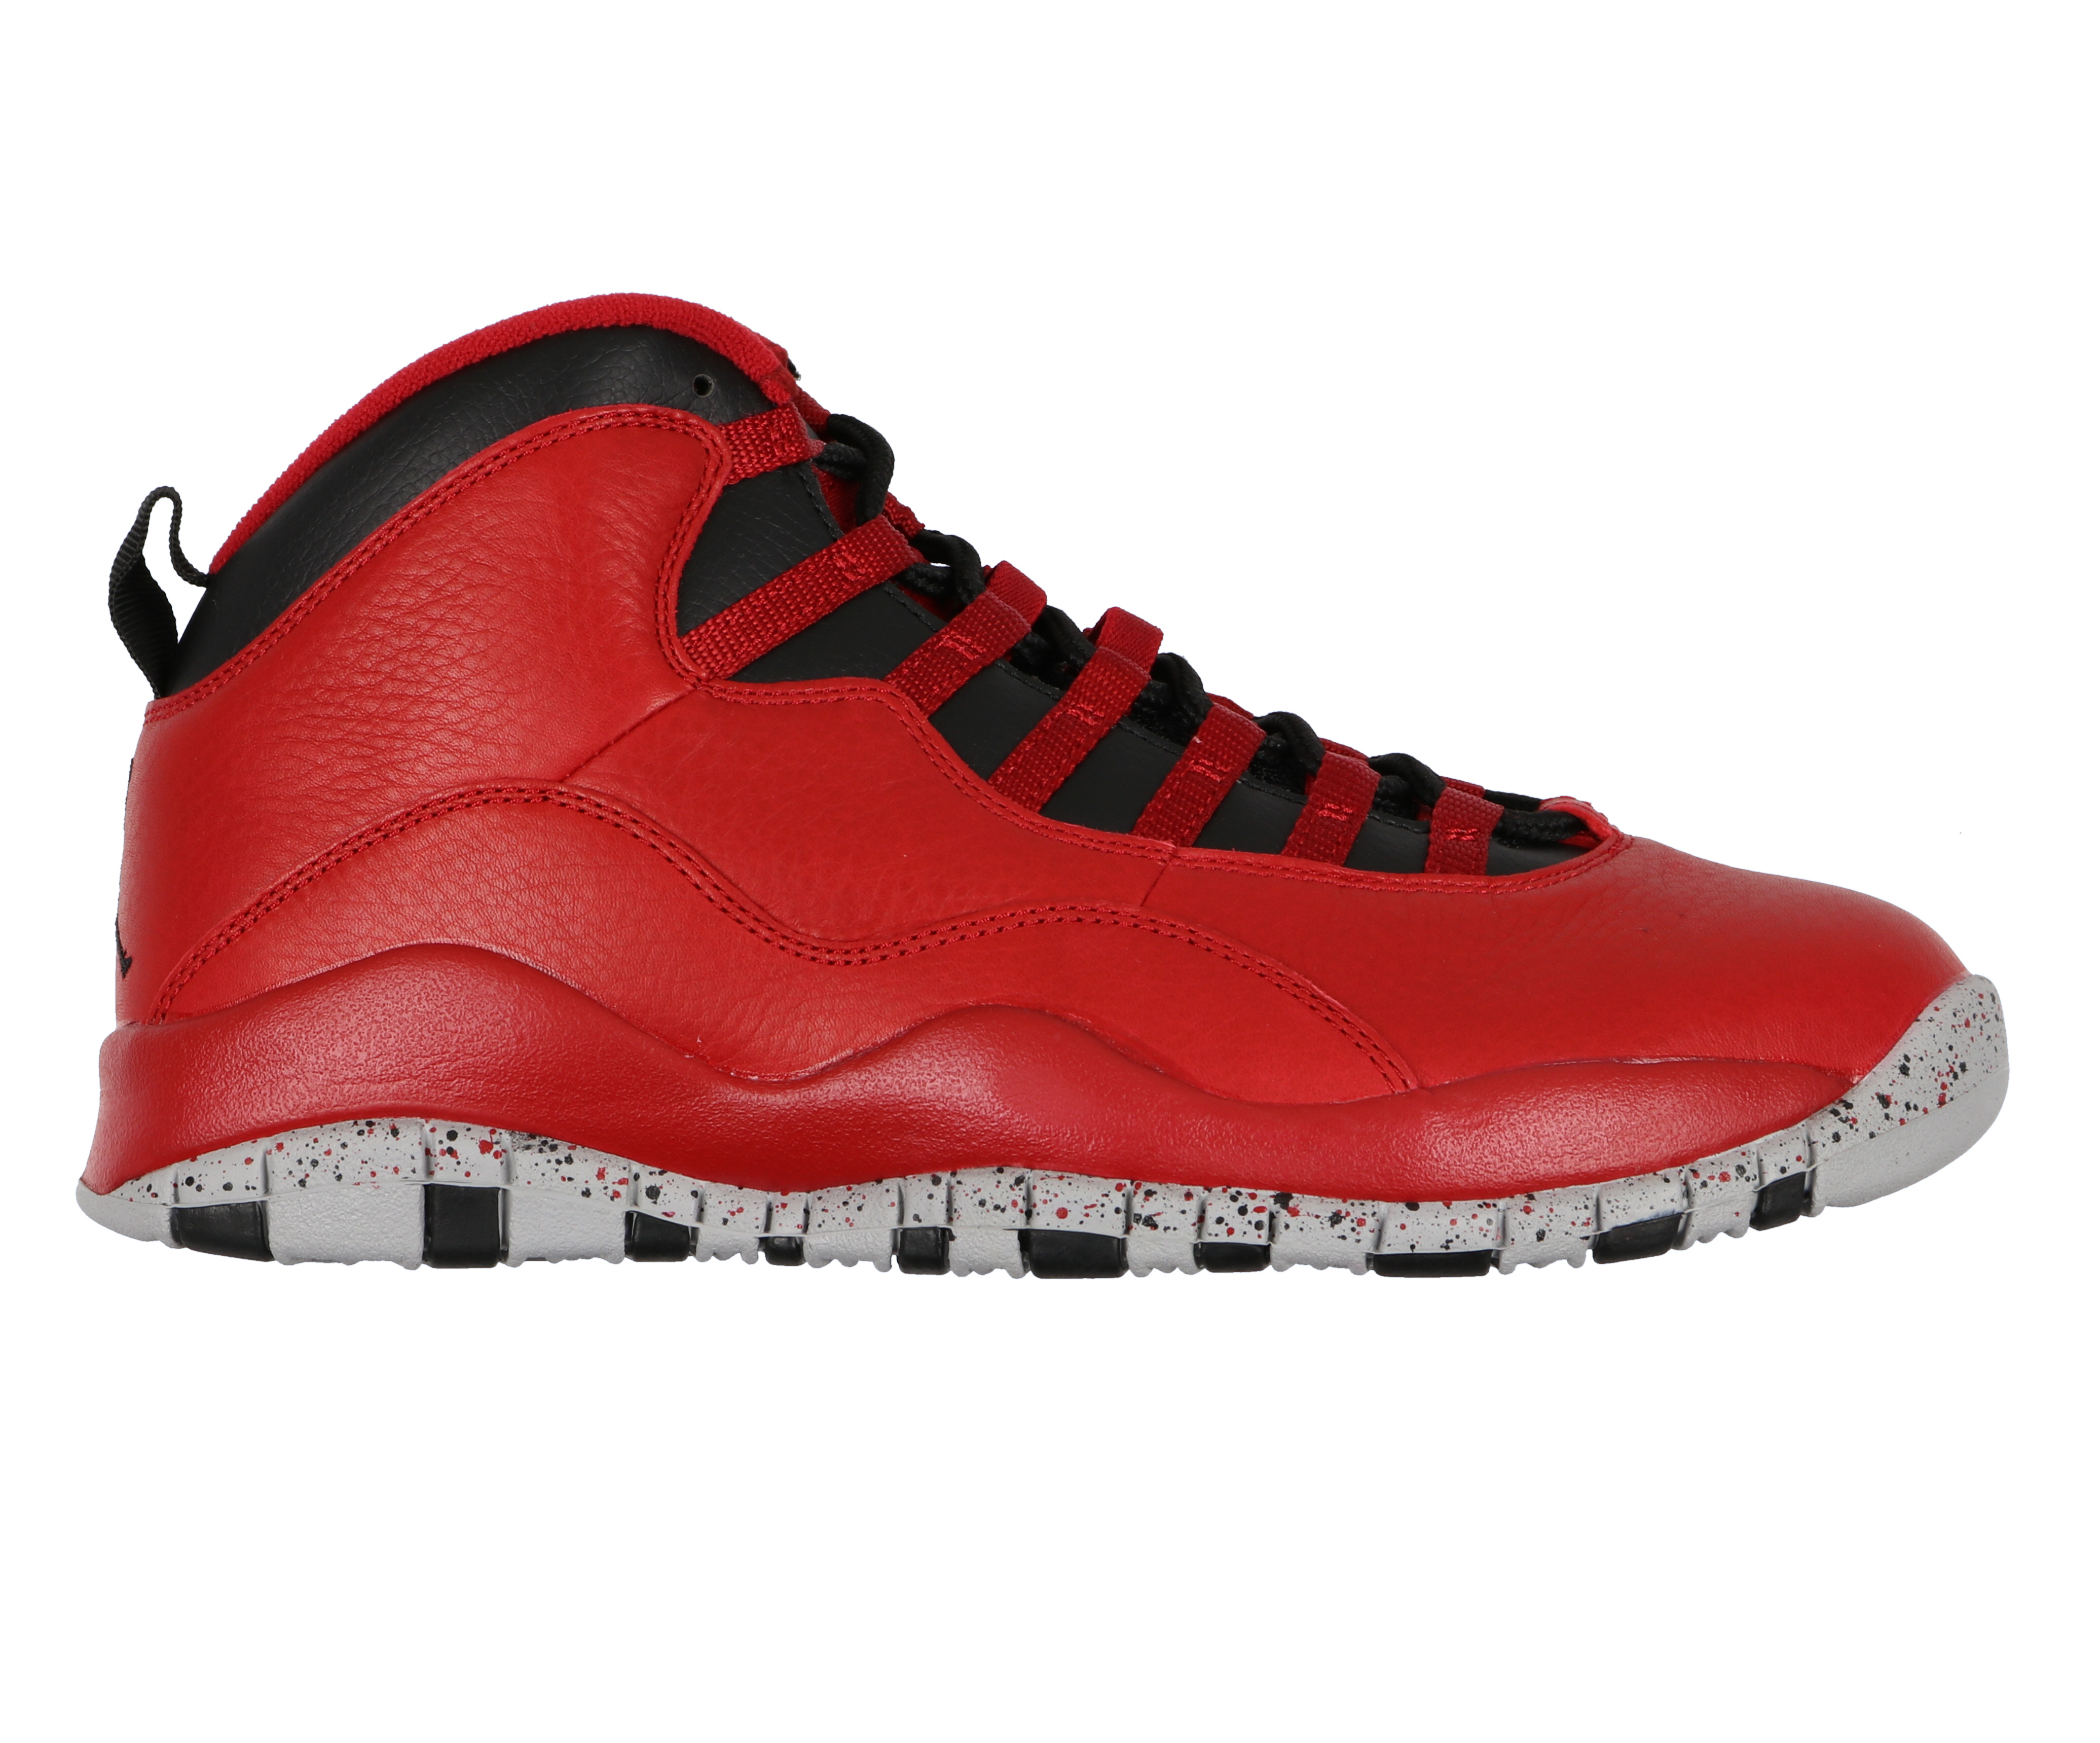 Jordan Men's Retro 10 30th Basketball Shoes sz 9.5 Red Black Bulls Over Broadway Edition - image 2 of 7